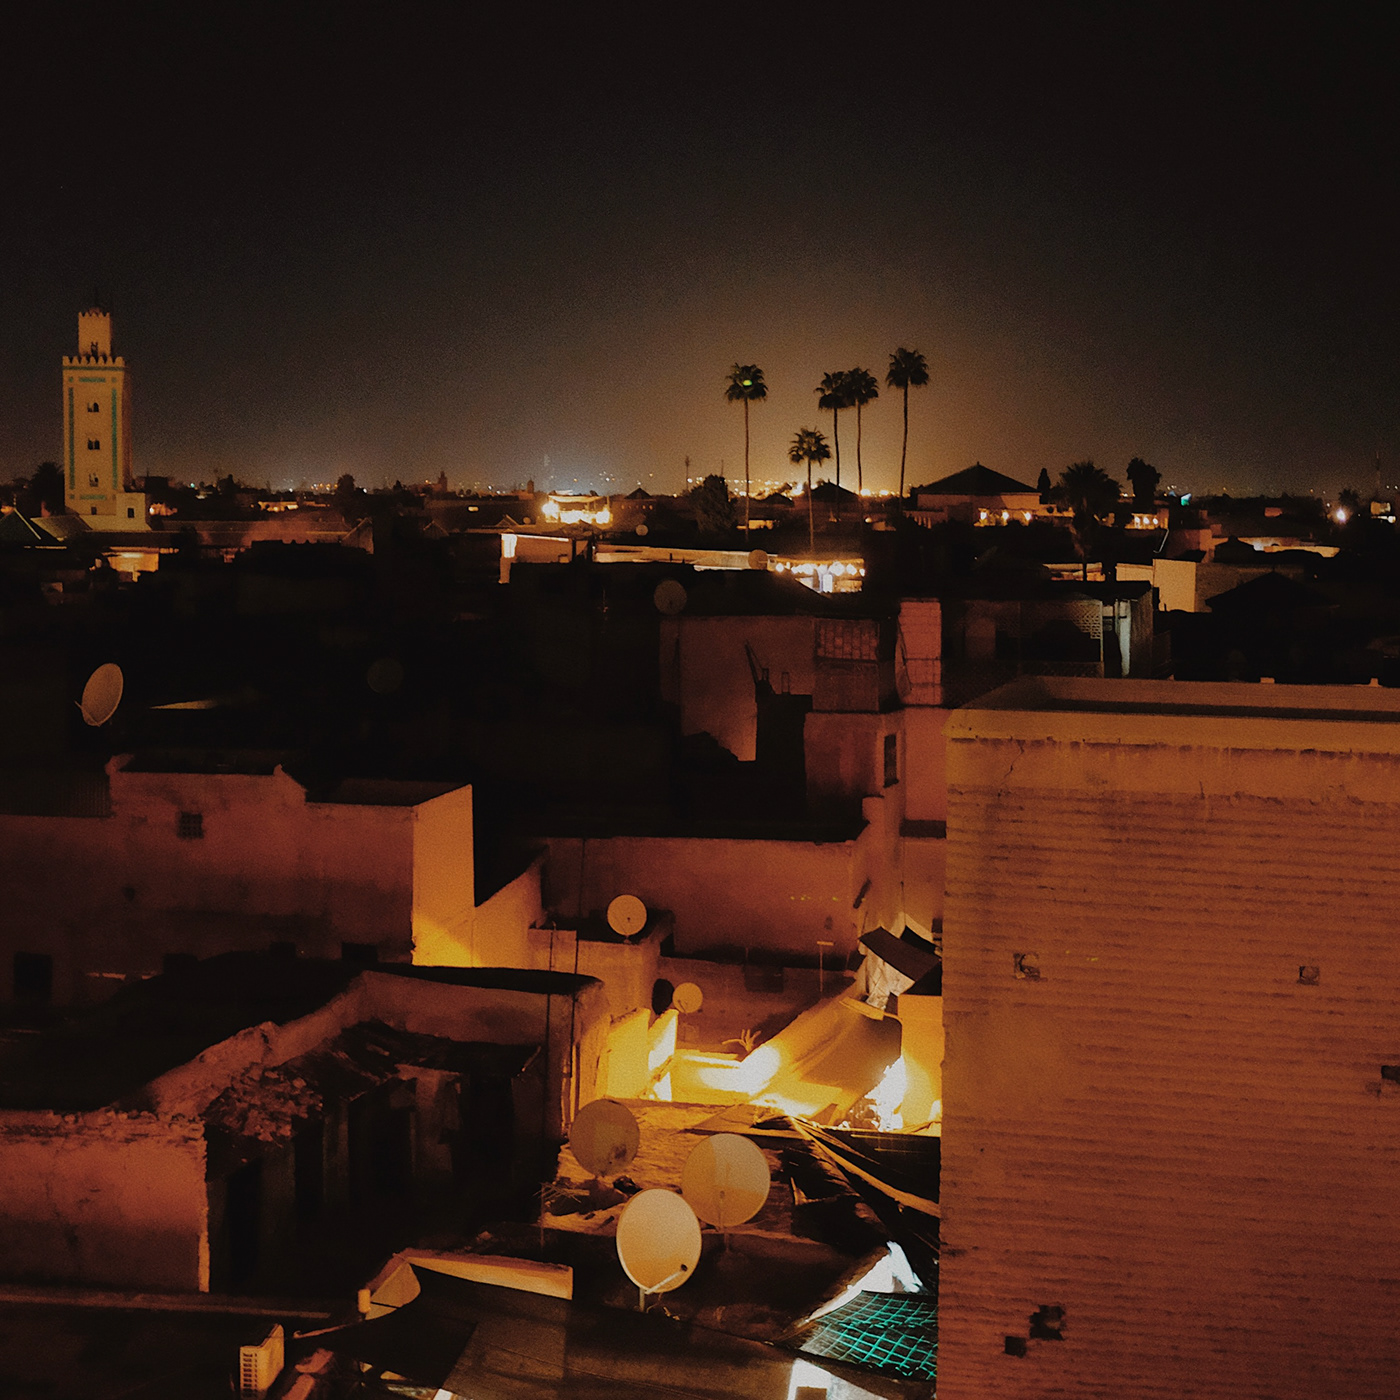 fujifilm Landscape lightroom Maroc Marrakech Morocco people Photography  street photography x100t